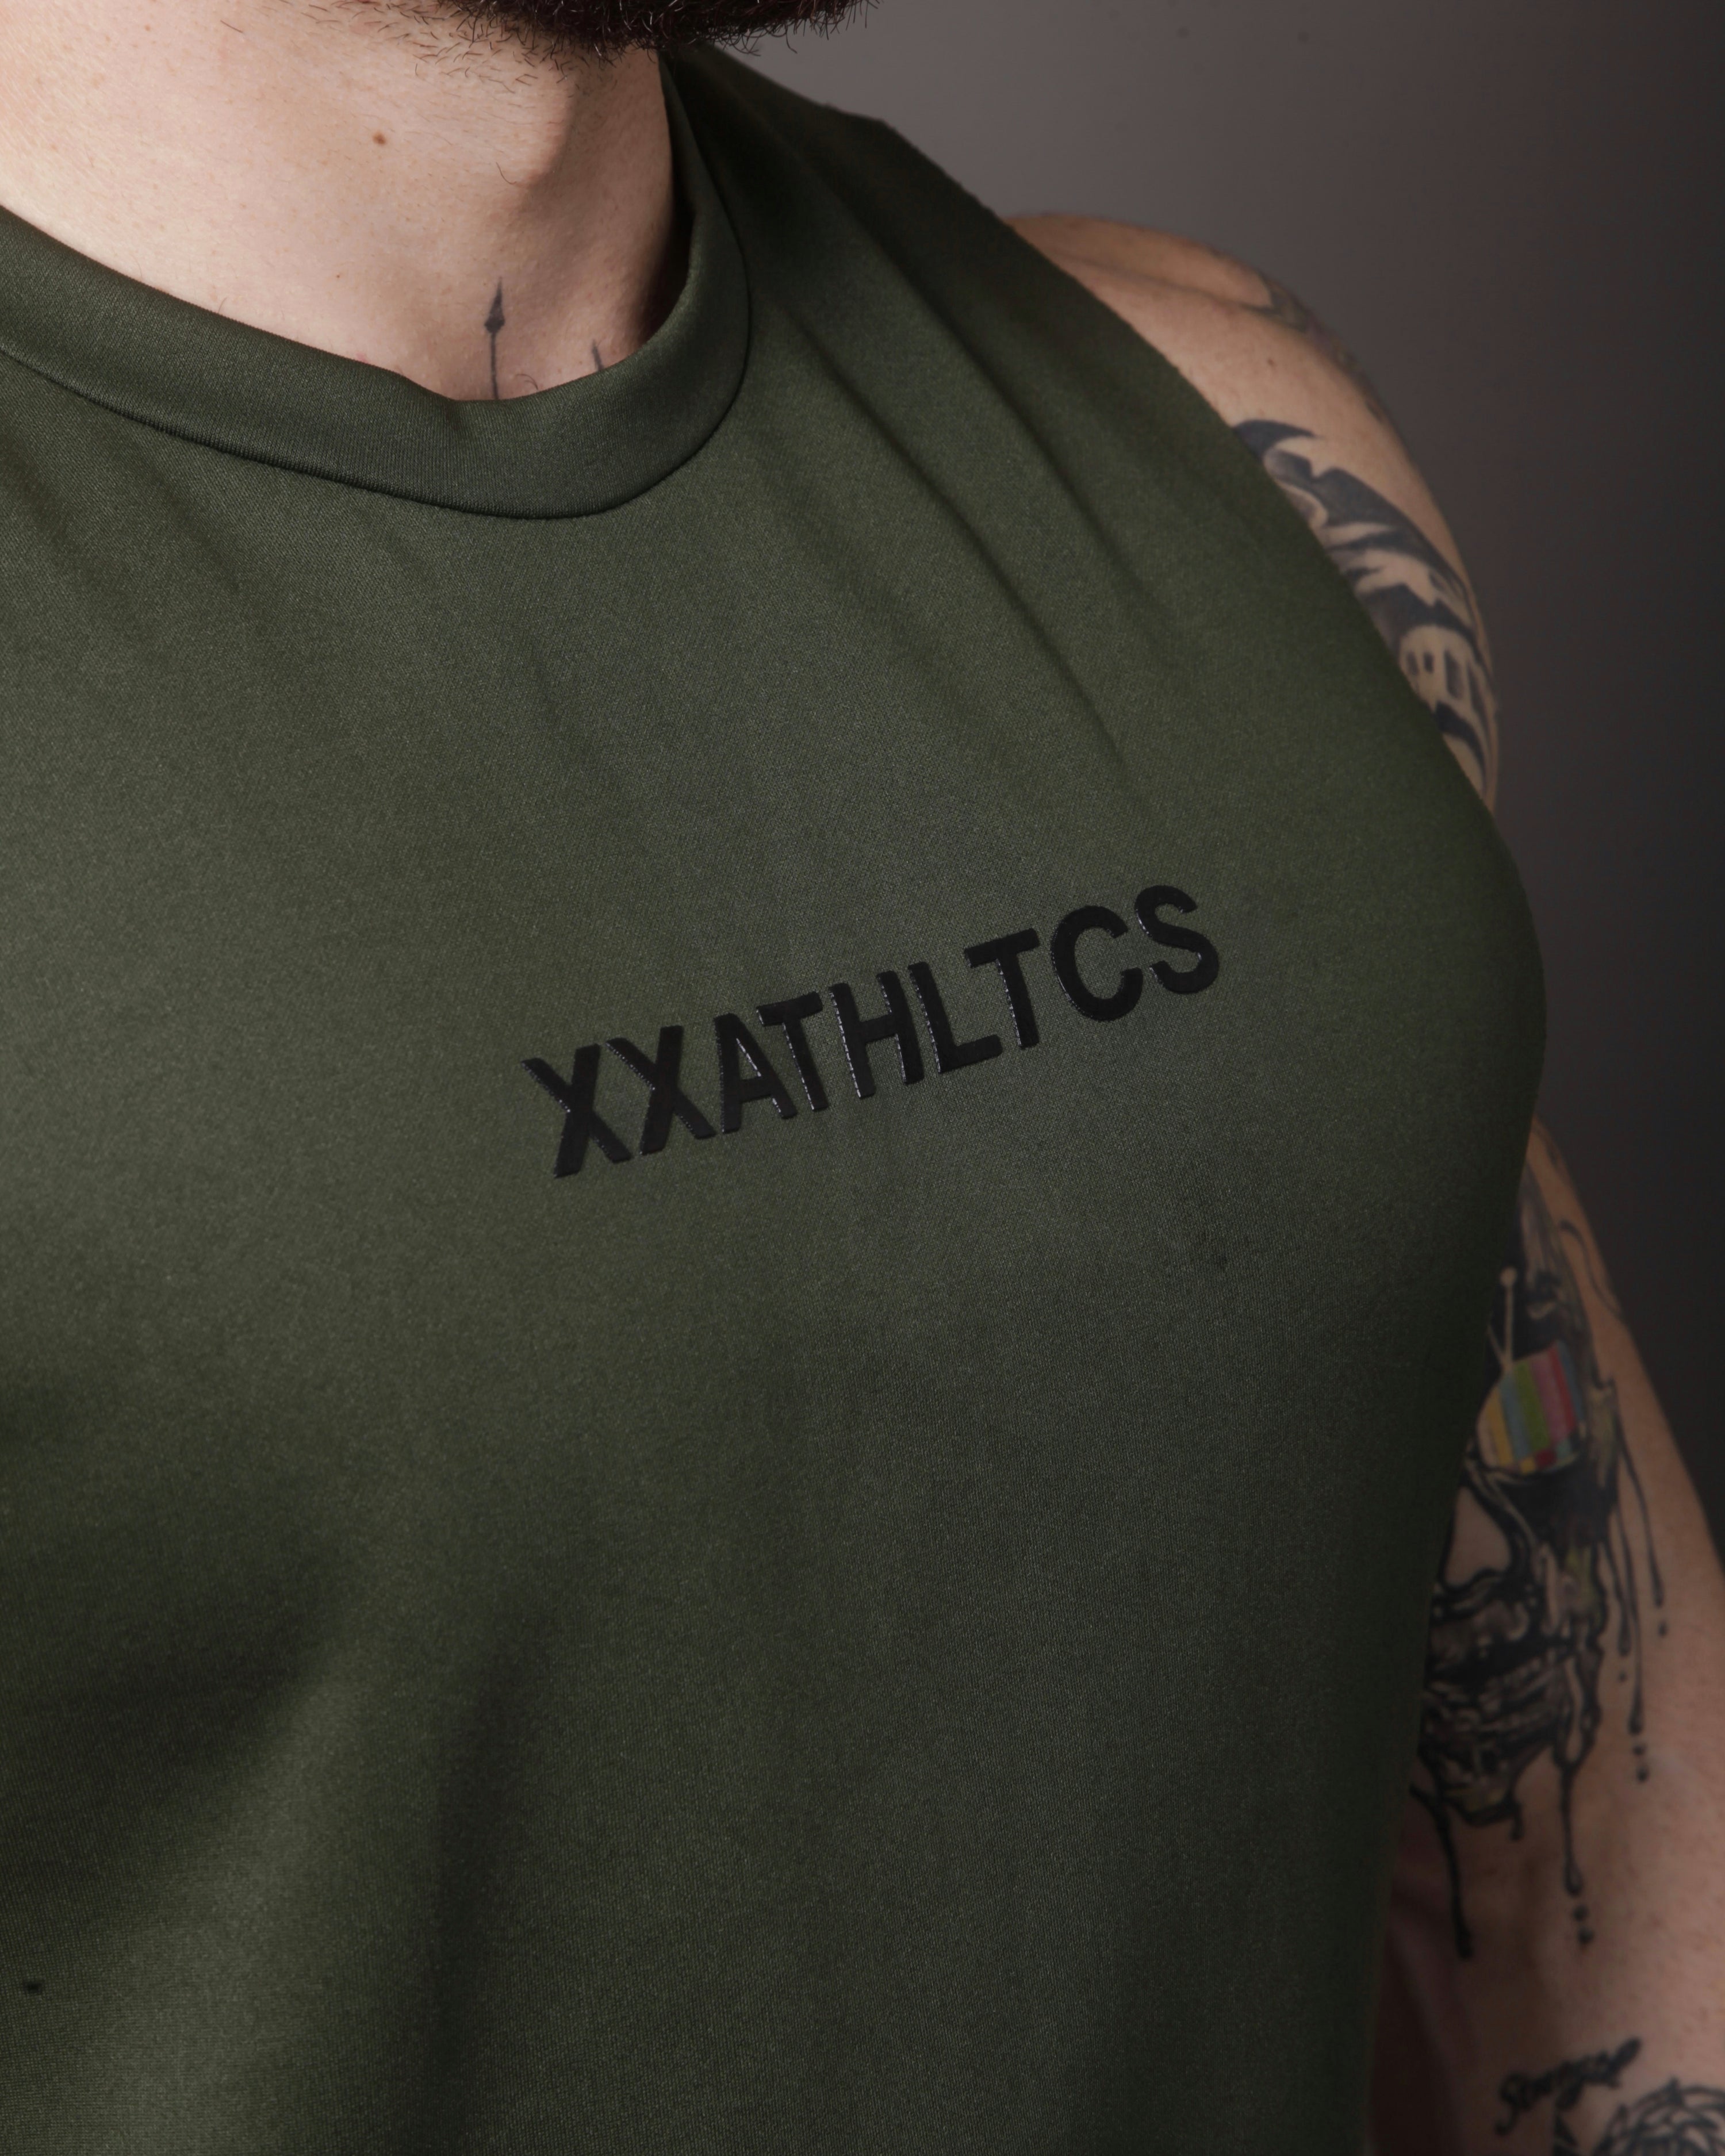 XXATHLTCS Oversized Fit Tank Top - Army Green